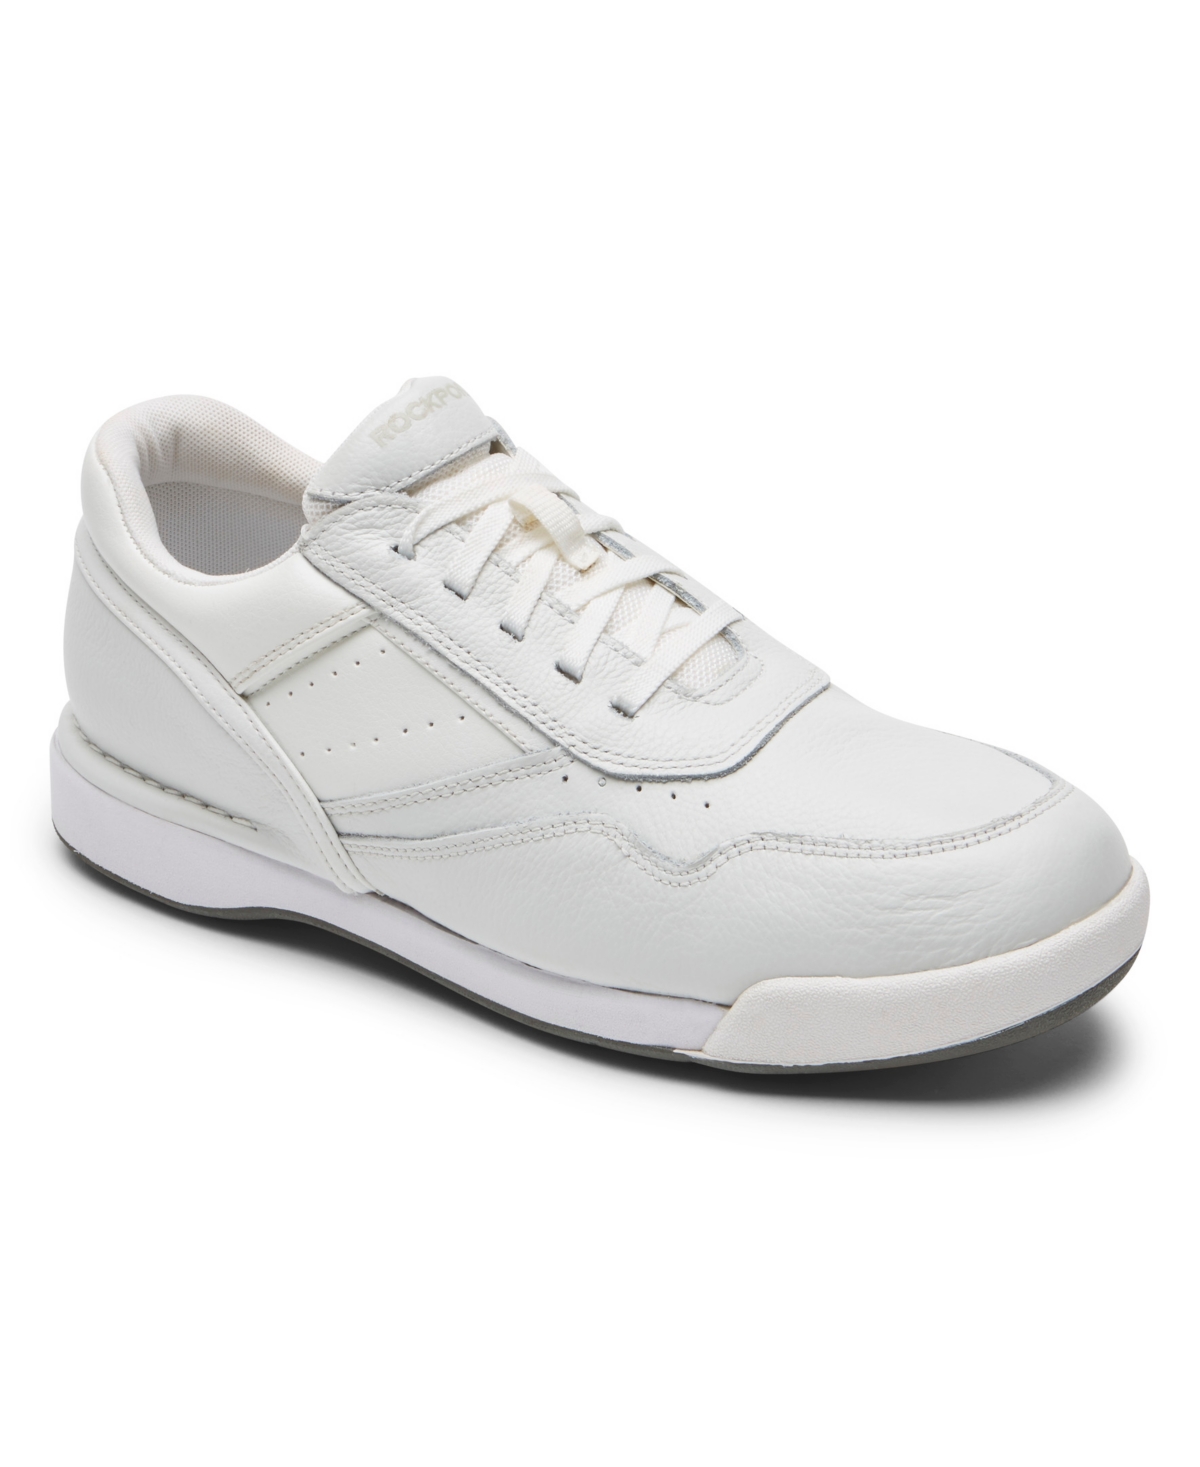 Men's M7100 Milprowalker Shoes - Sport White, Wheat